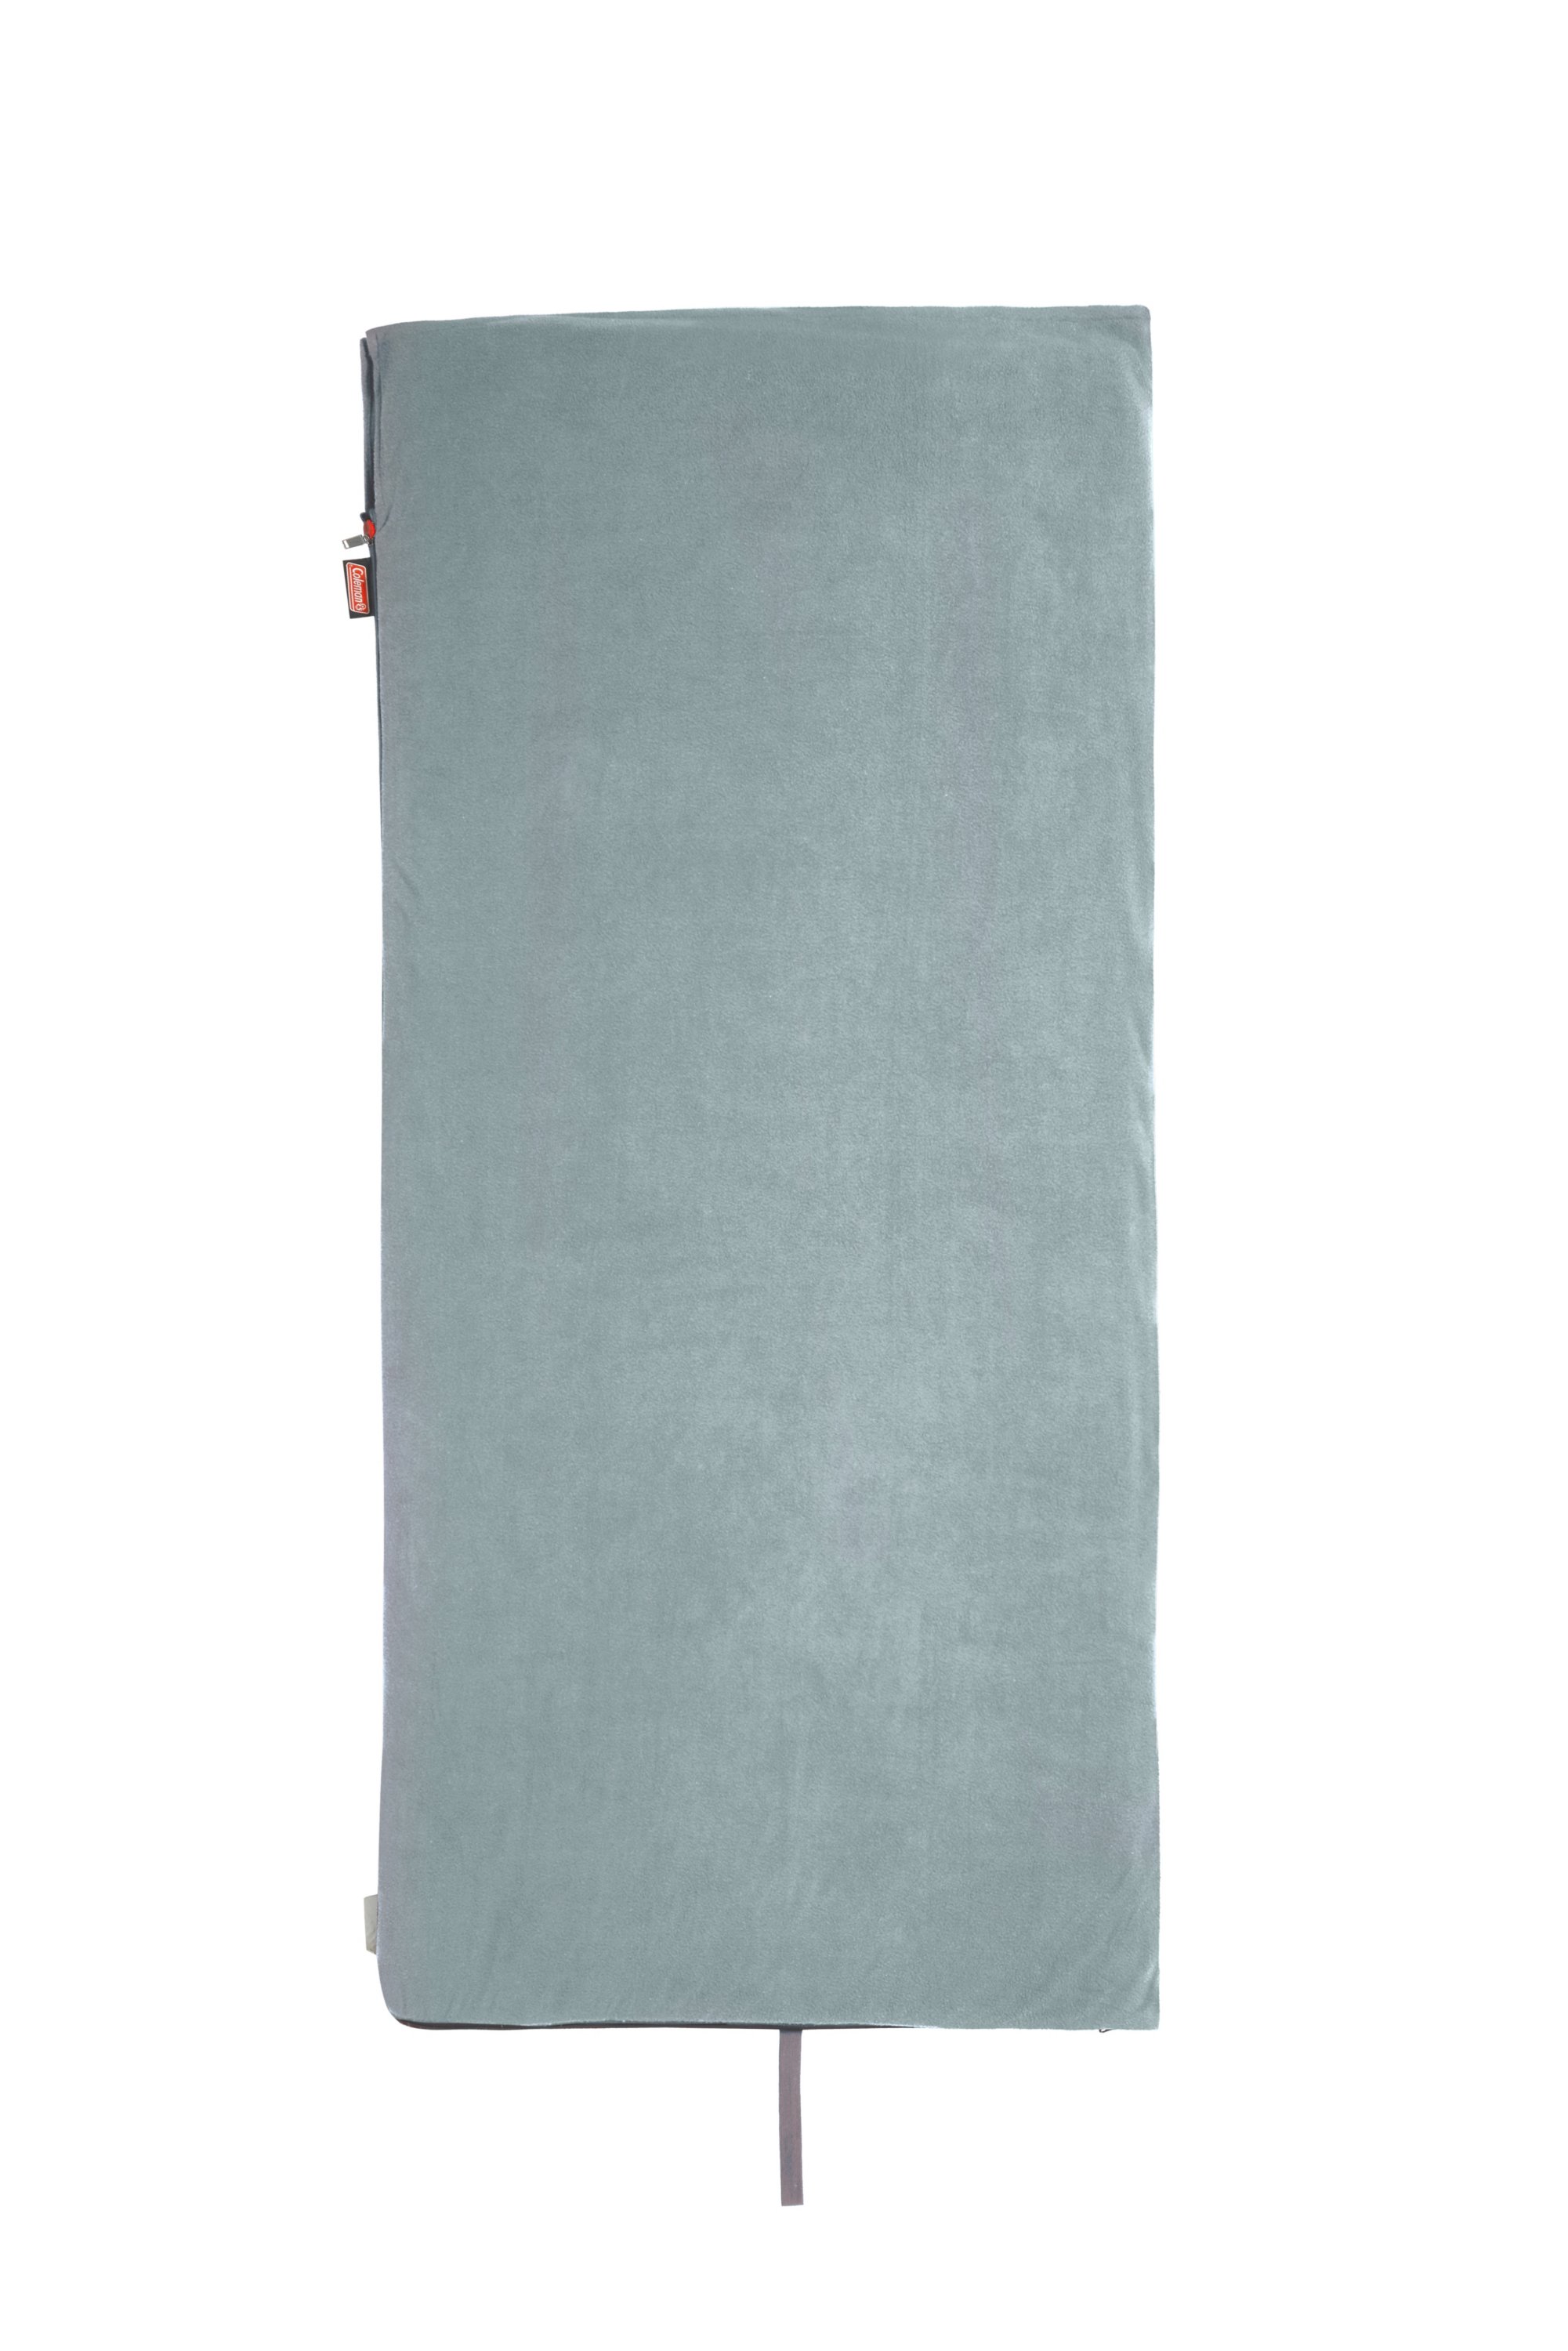  Coleman *Sleeping Bag STRAT 50F Fleece Gray C003